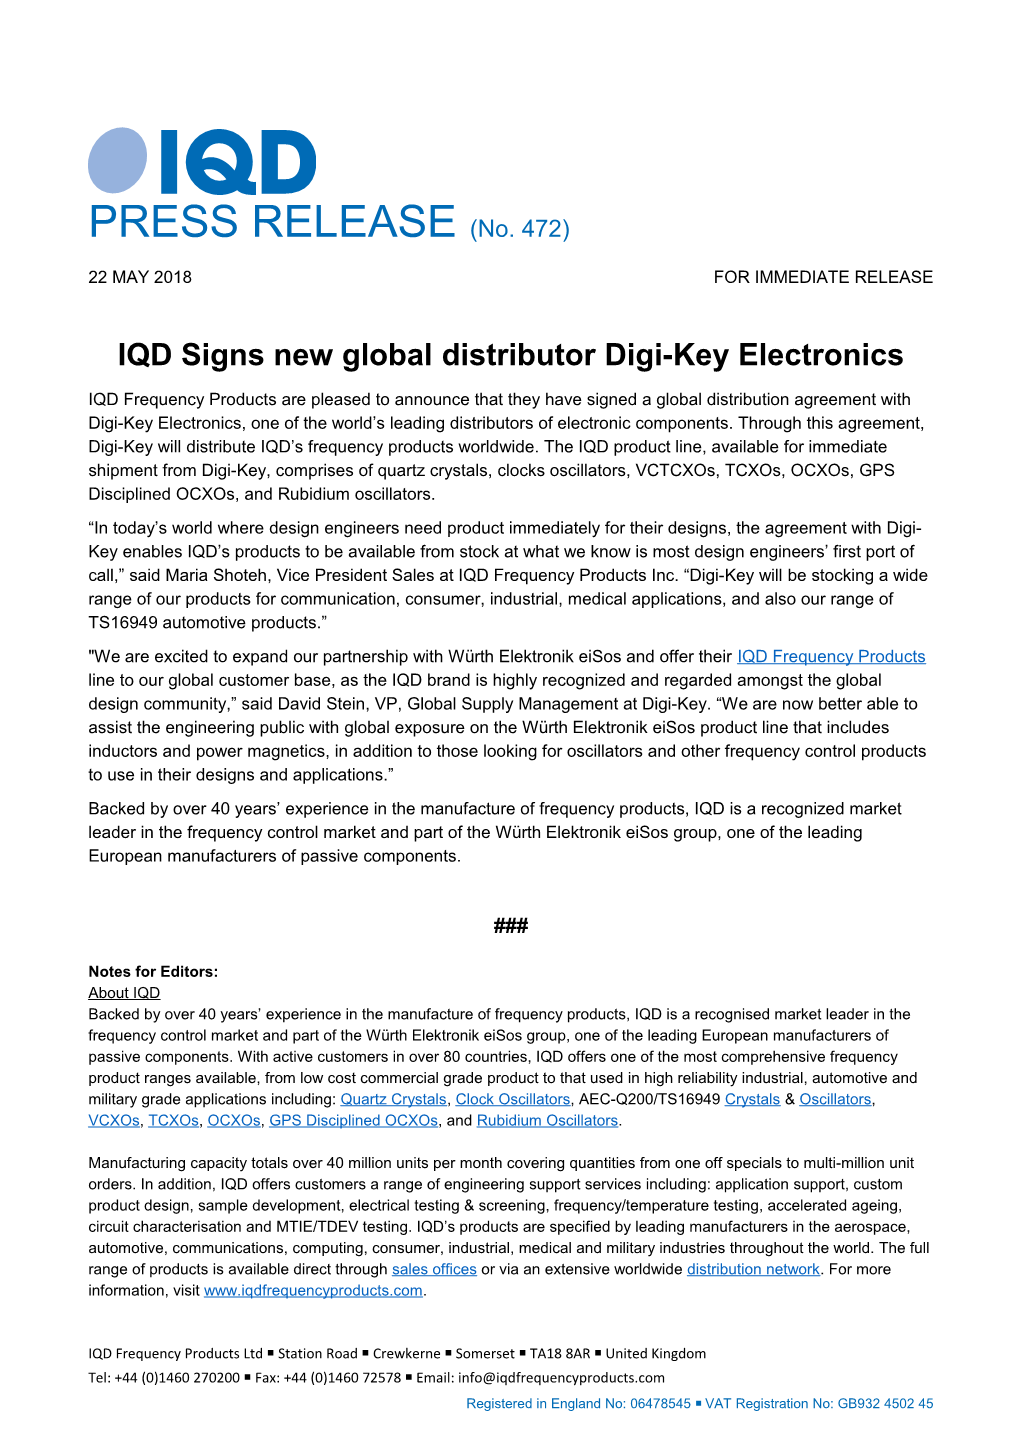 IQD Signs New Global Distributor Digi-Key Electronics